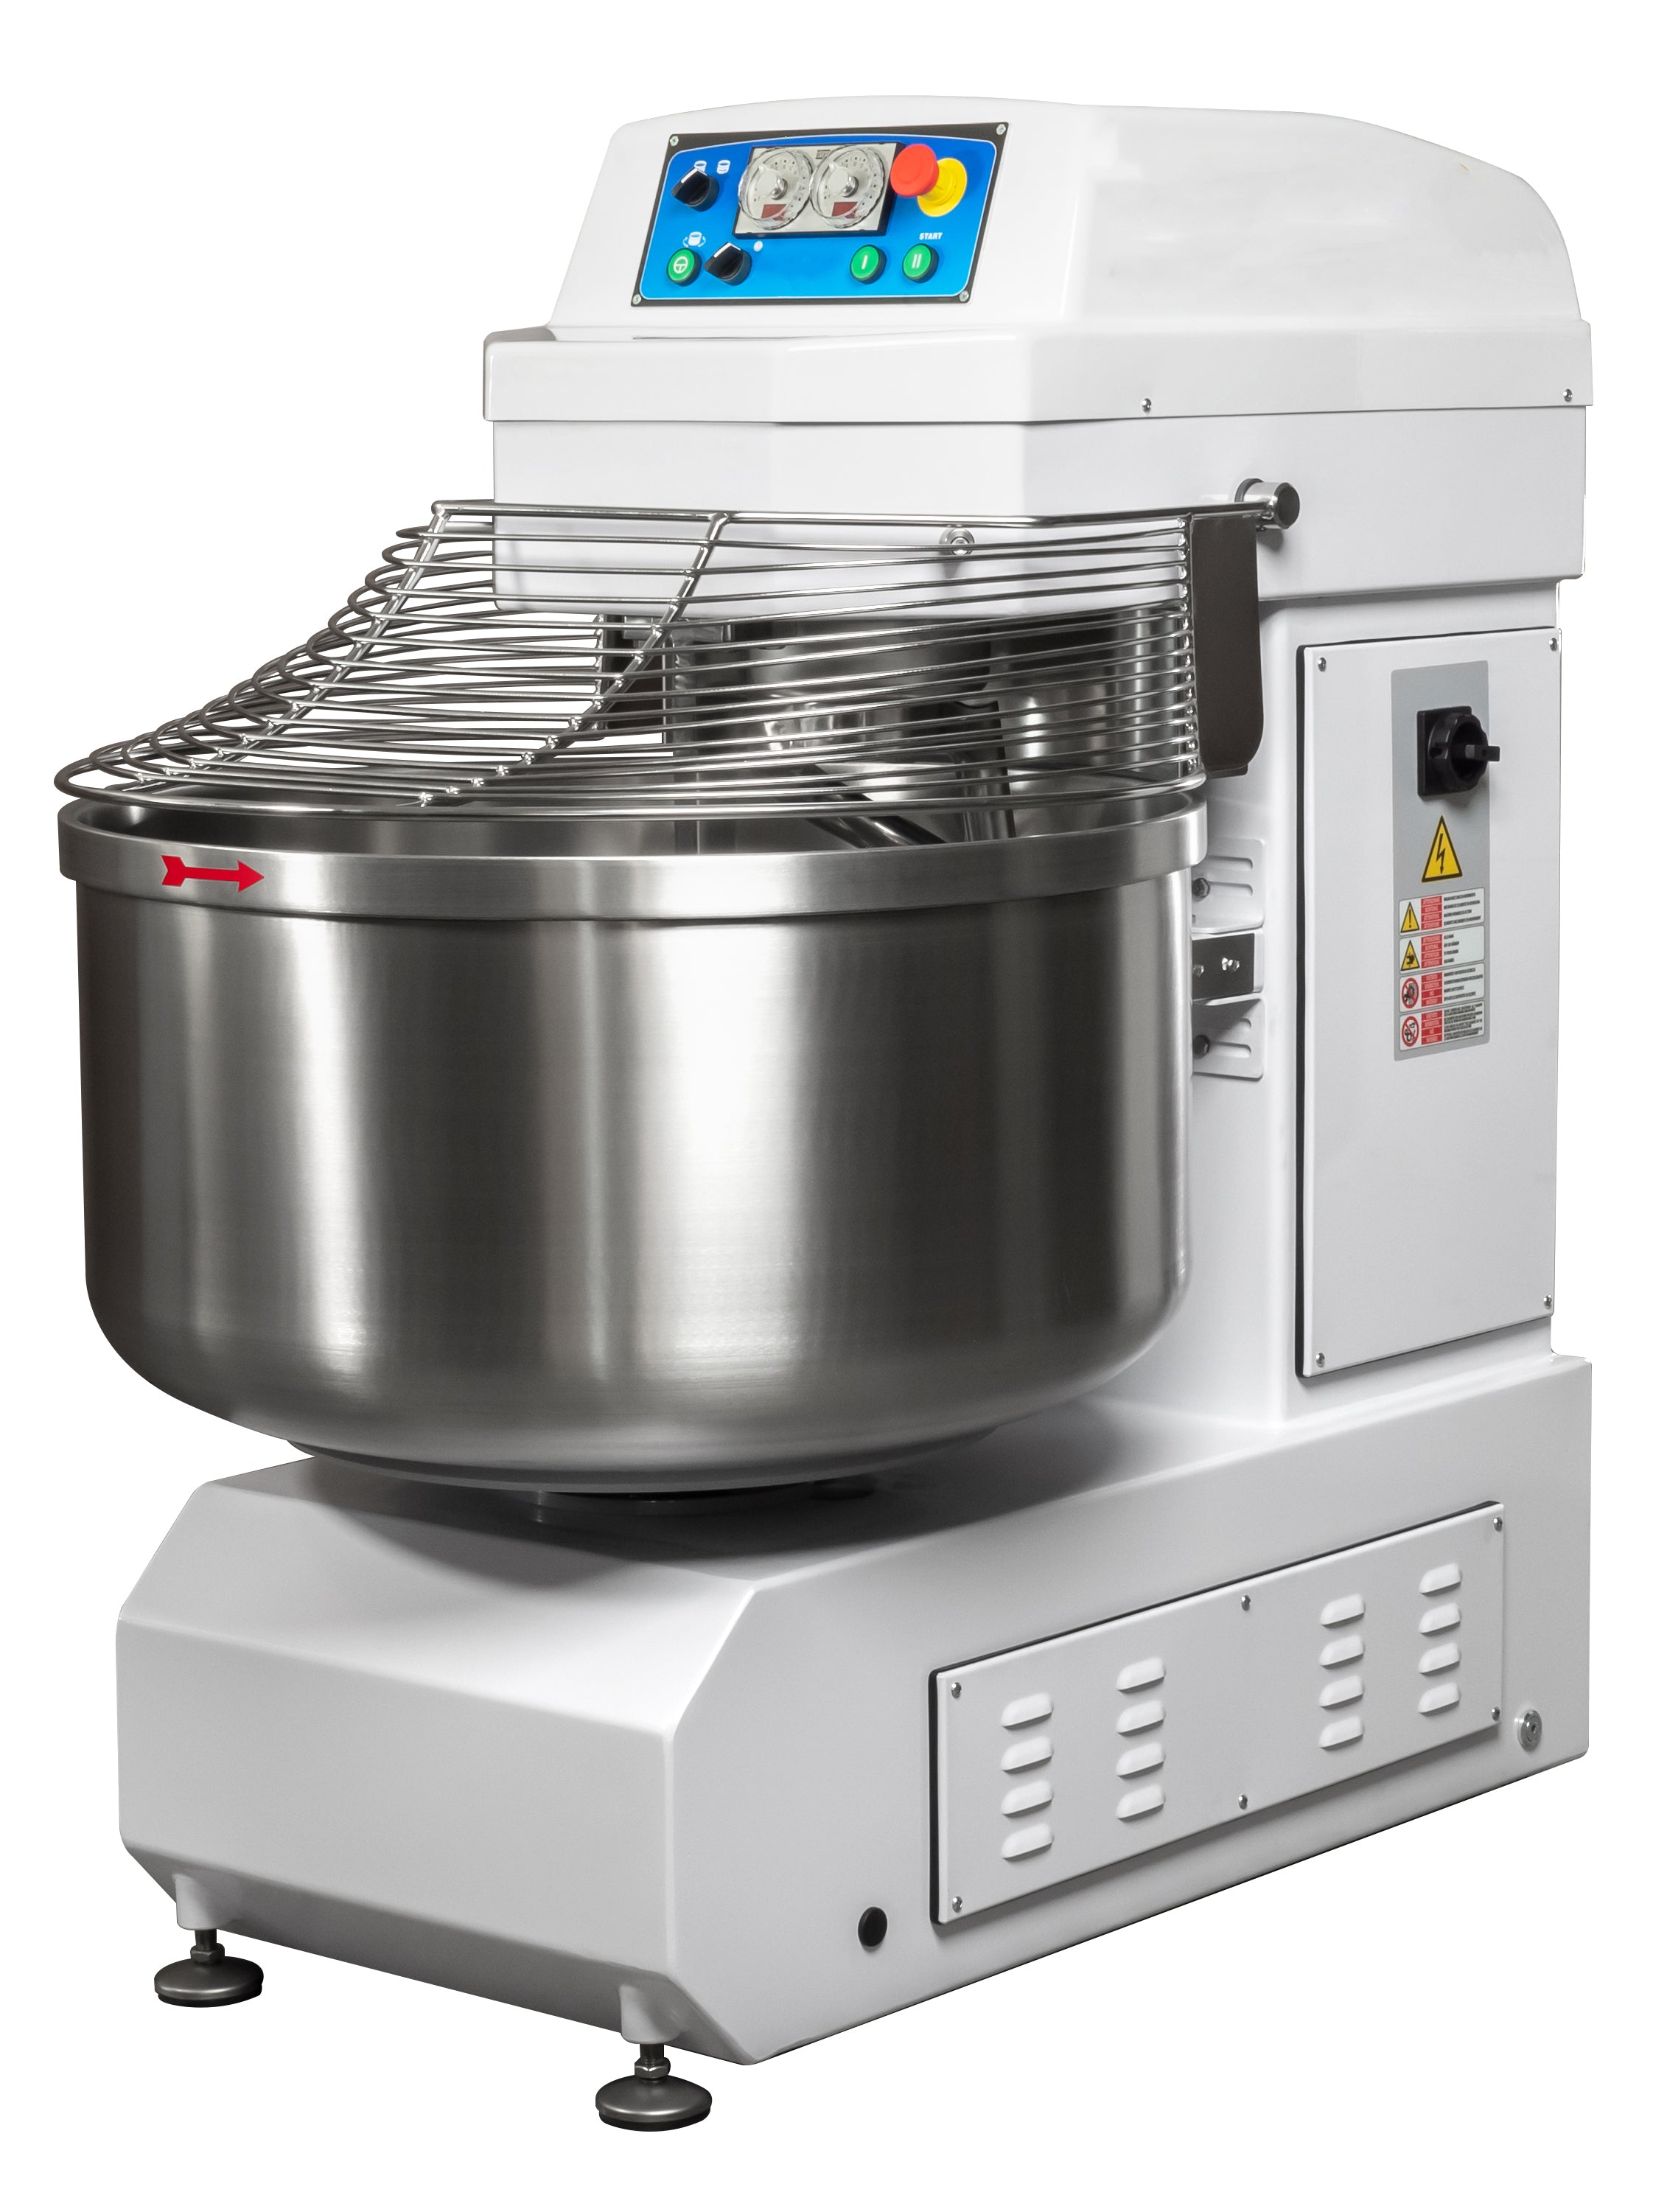 Doyon ATI150I 2-Speed Spiral Mixer, 520 lbs Dough Capacity